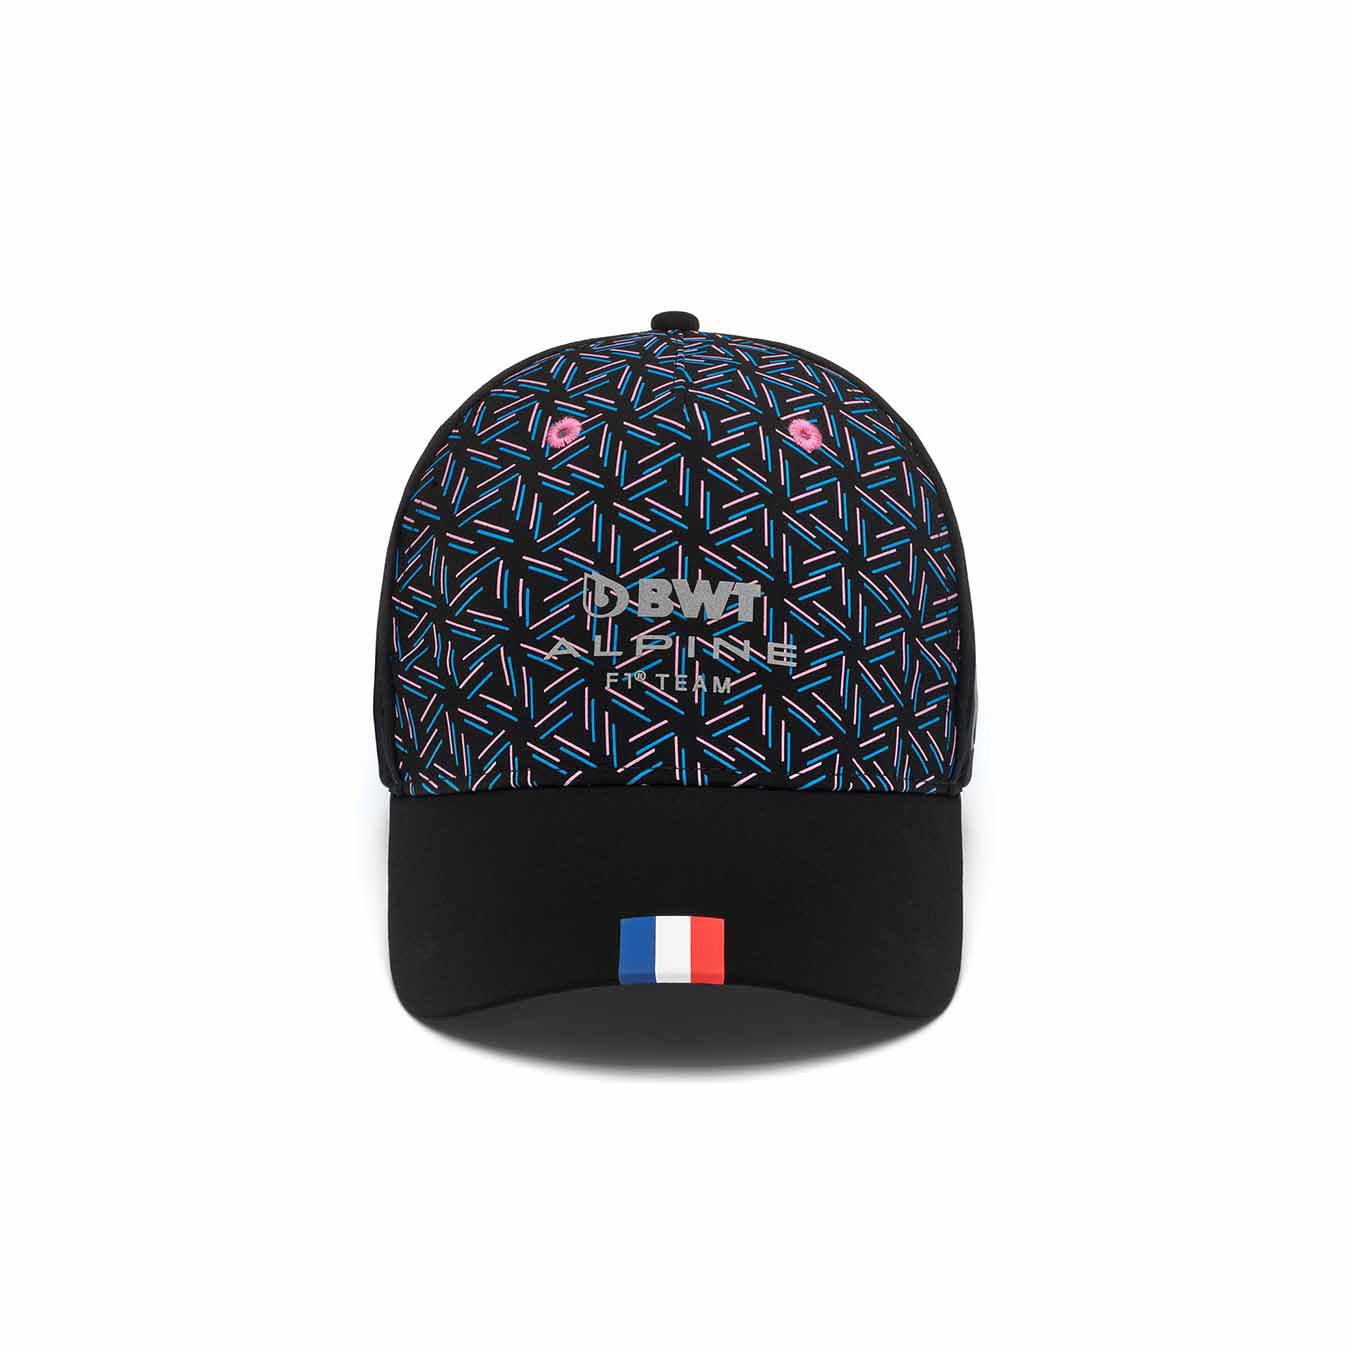 Alpine F1 Team Fan Cap Black